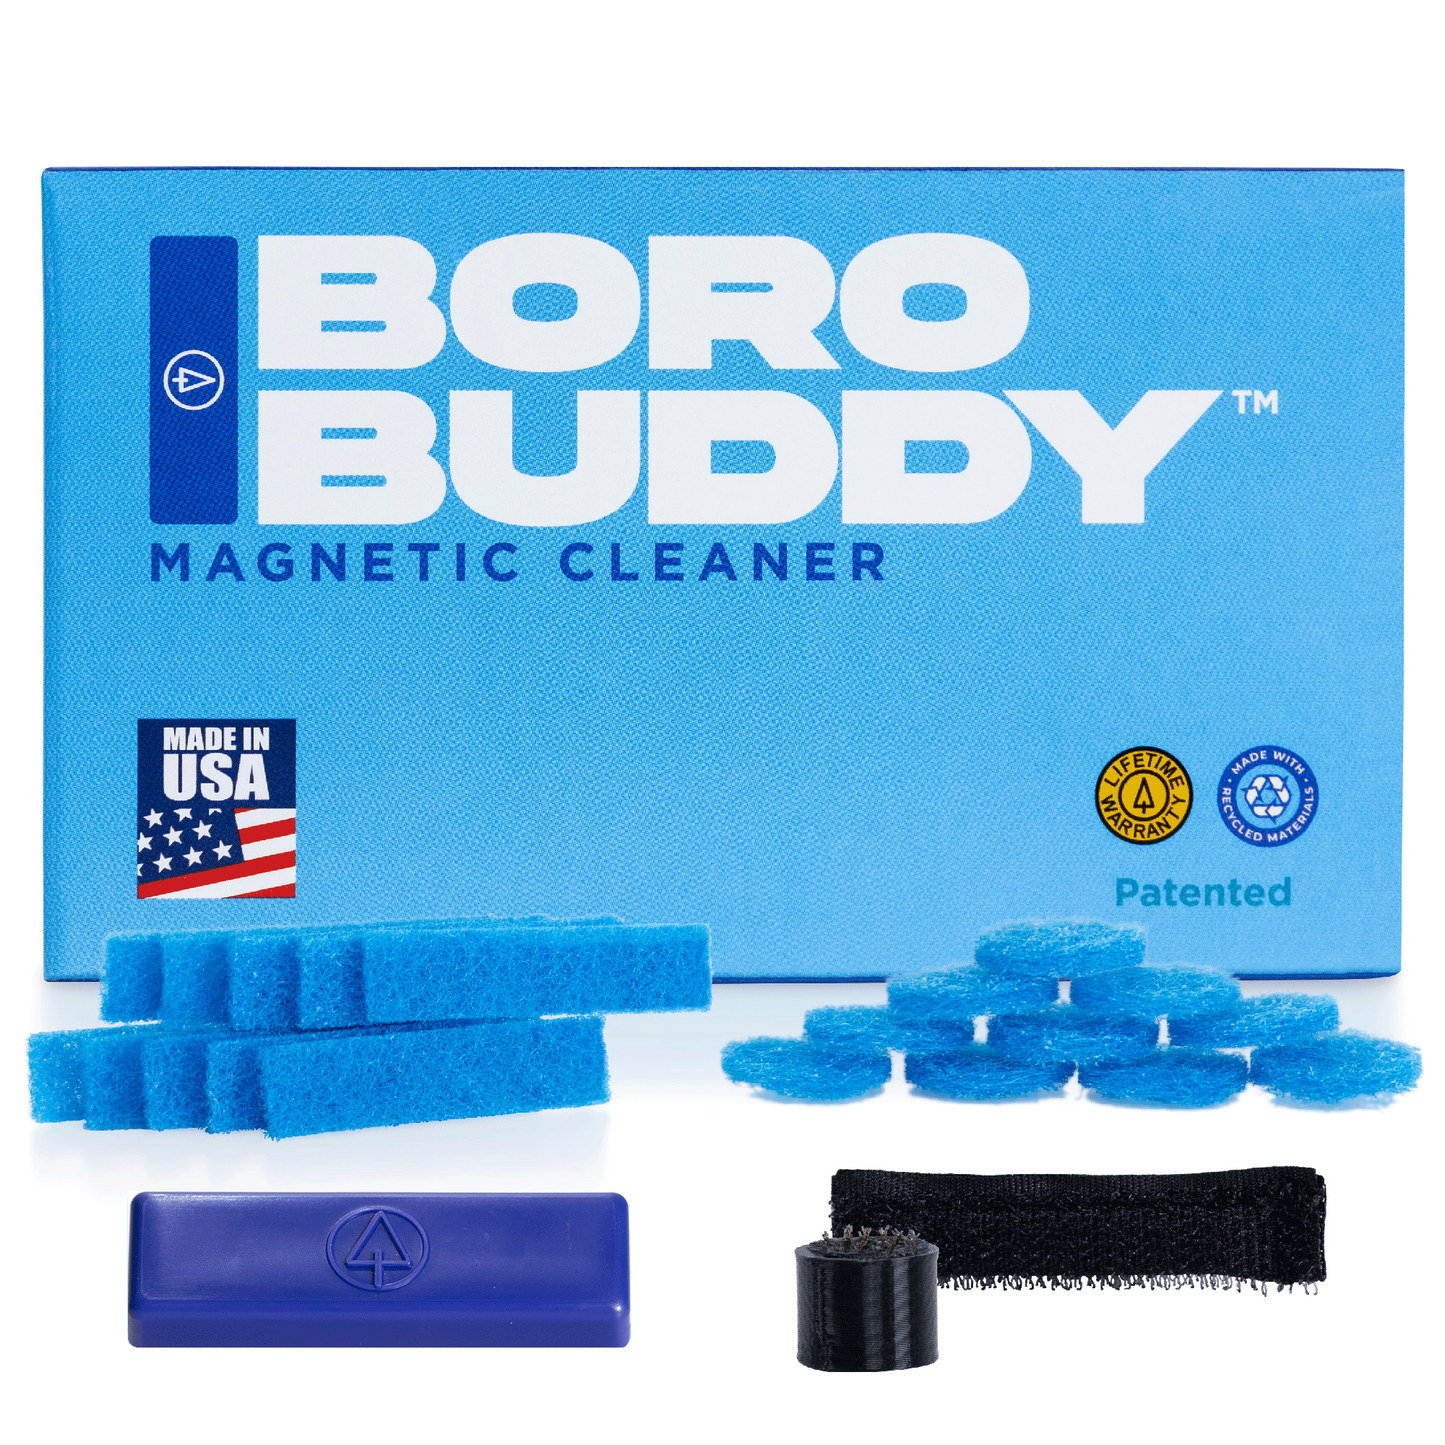 BoroBuddy™ Magnetic Cleaner